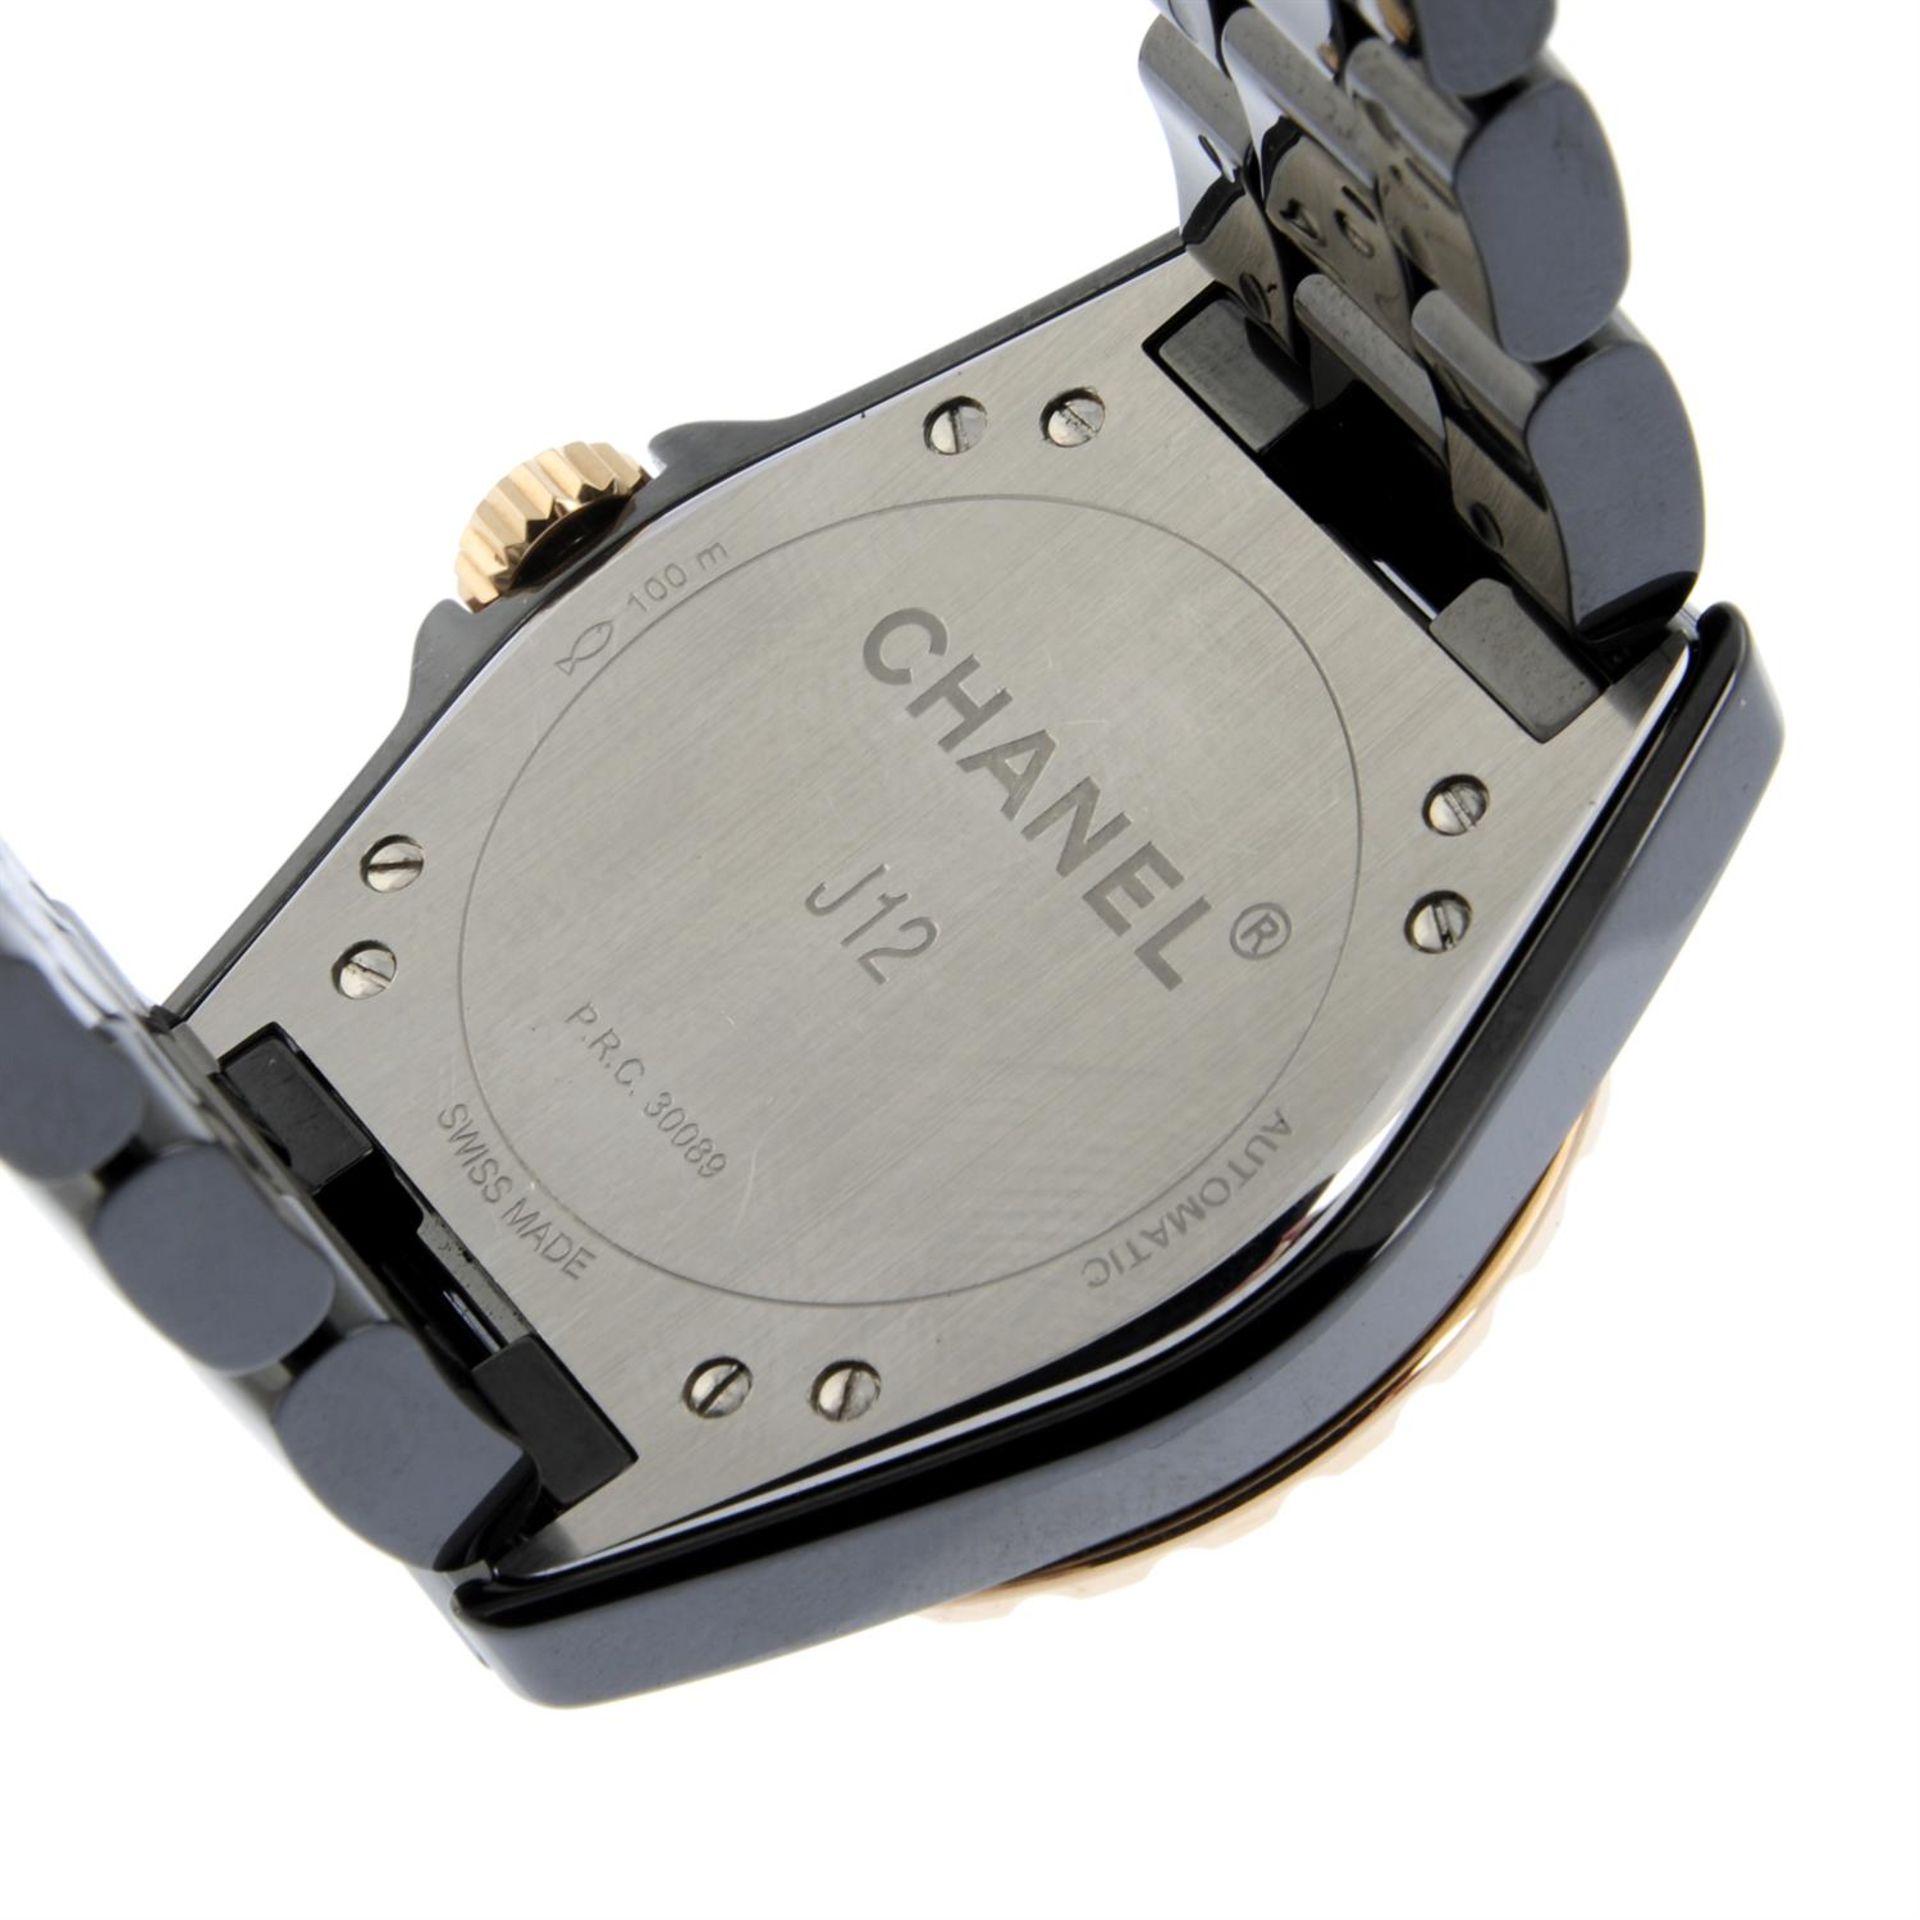 CHANEL - a ceramic J12 bracelet watch, 36mm. - Image 4 of 6